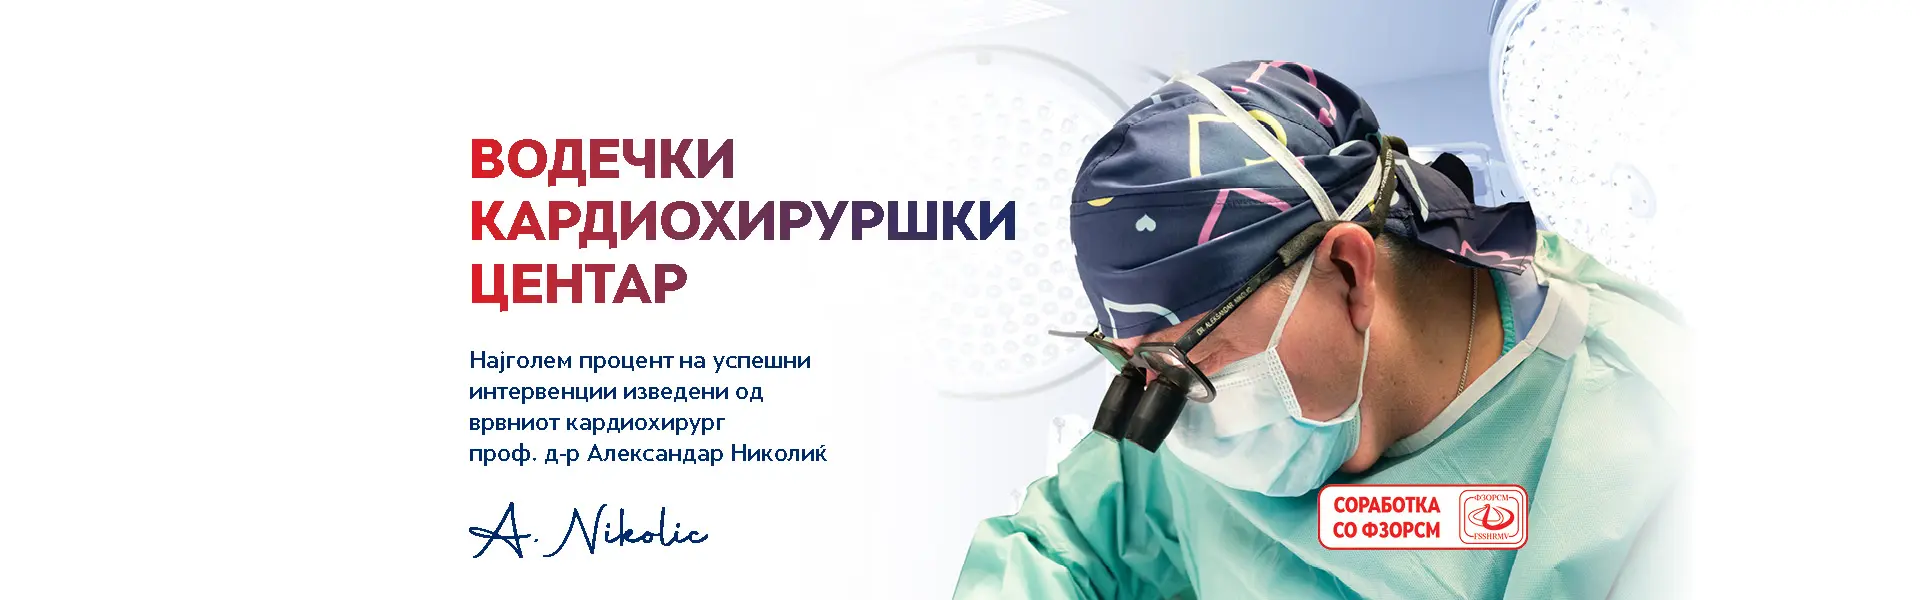 Korporativen WebBanner Kardiohirurgija Campaign Mart